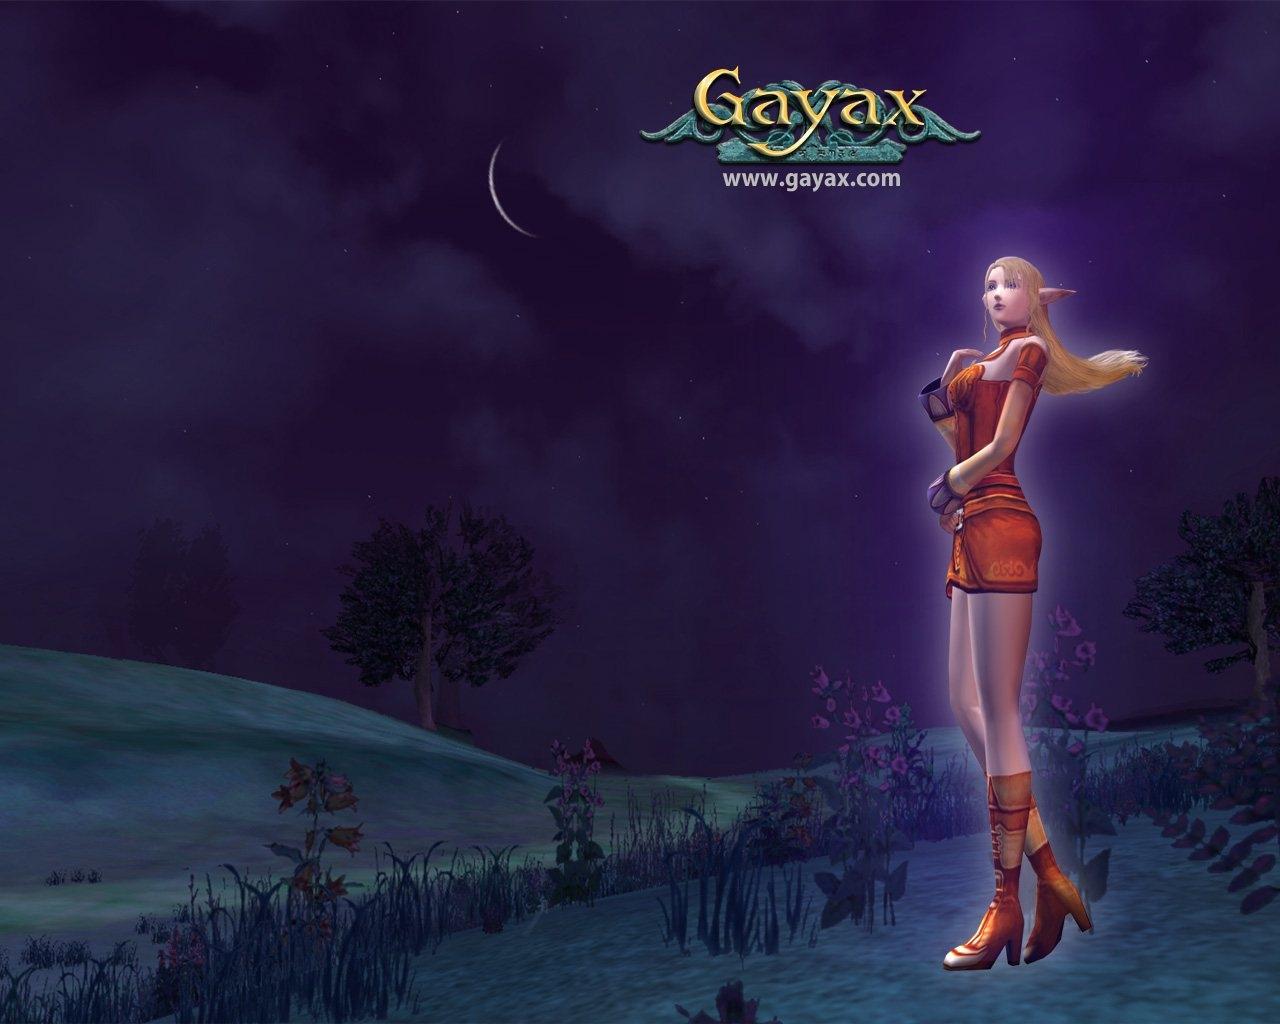 Gayax at 1280 x 960 size wallpapers HD quality